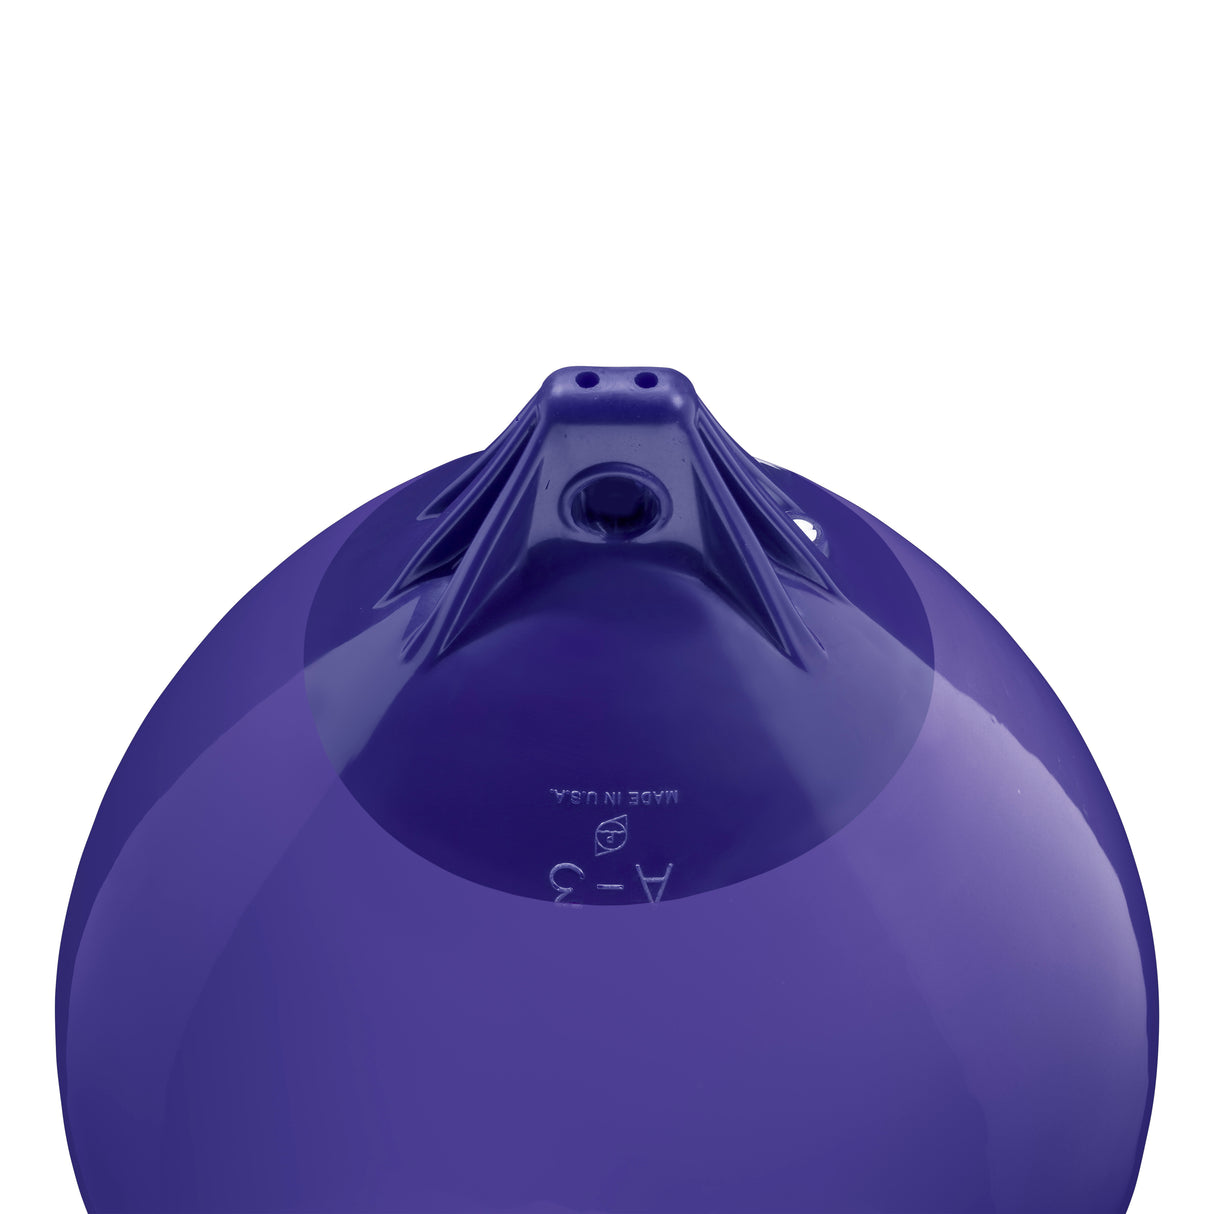 Purple inflatable buoy, Polyform A-3 angled shot